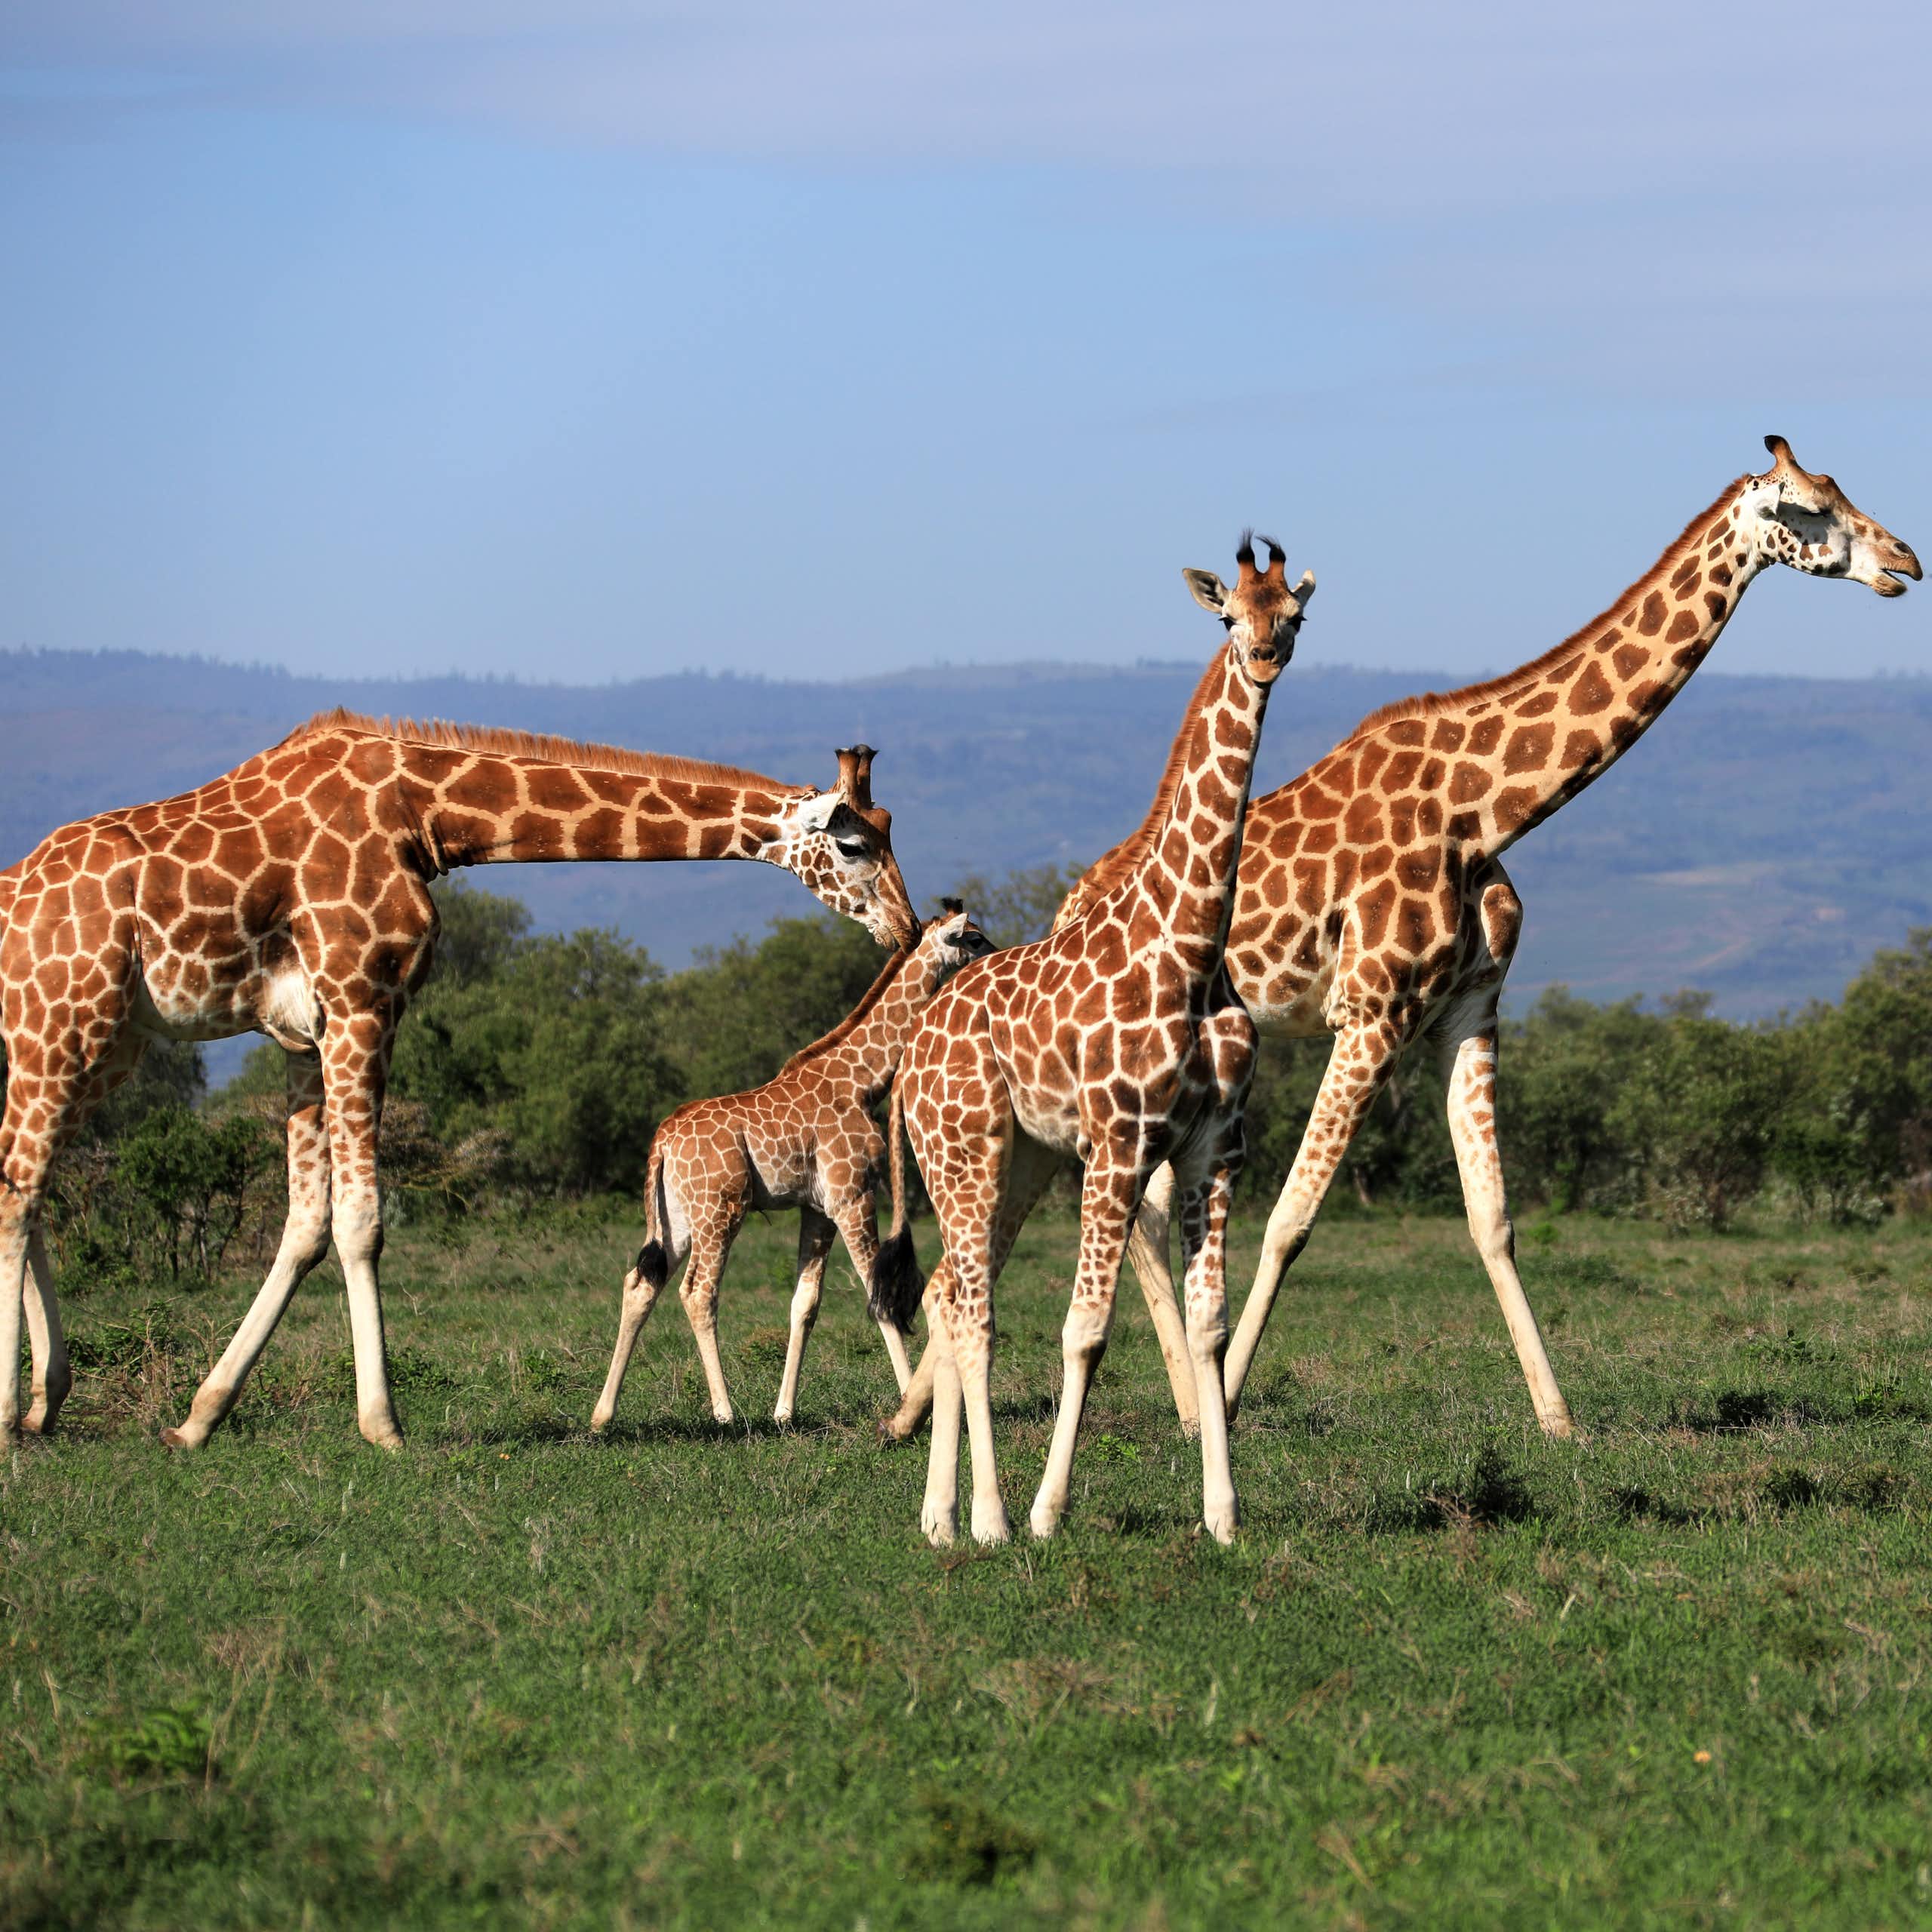 Five giraffes in a savanna landscape